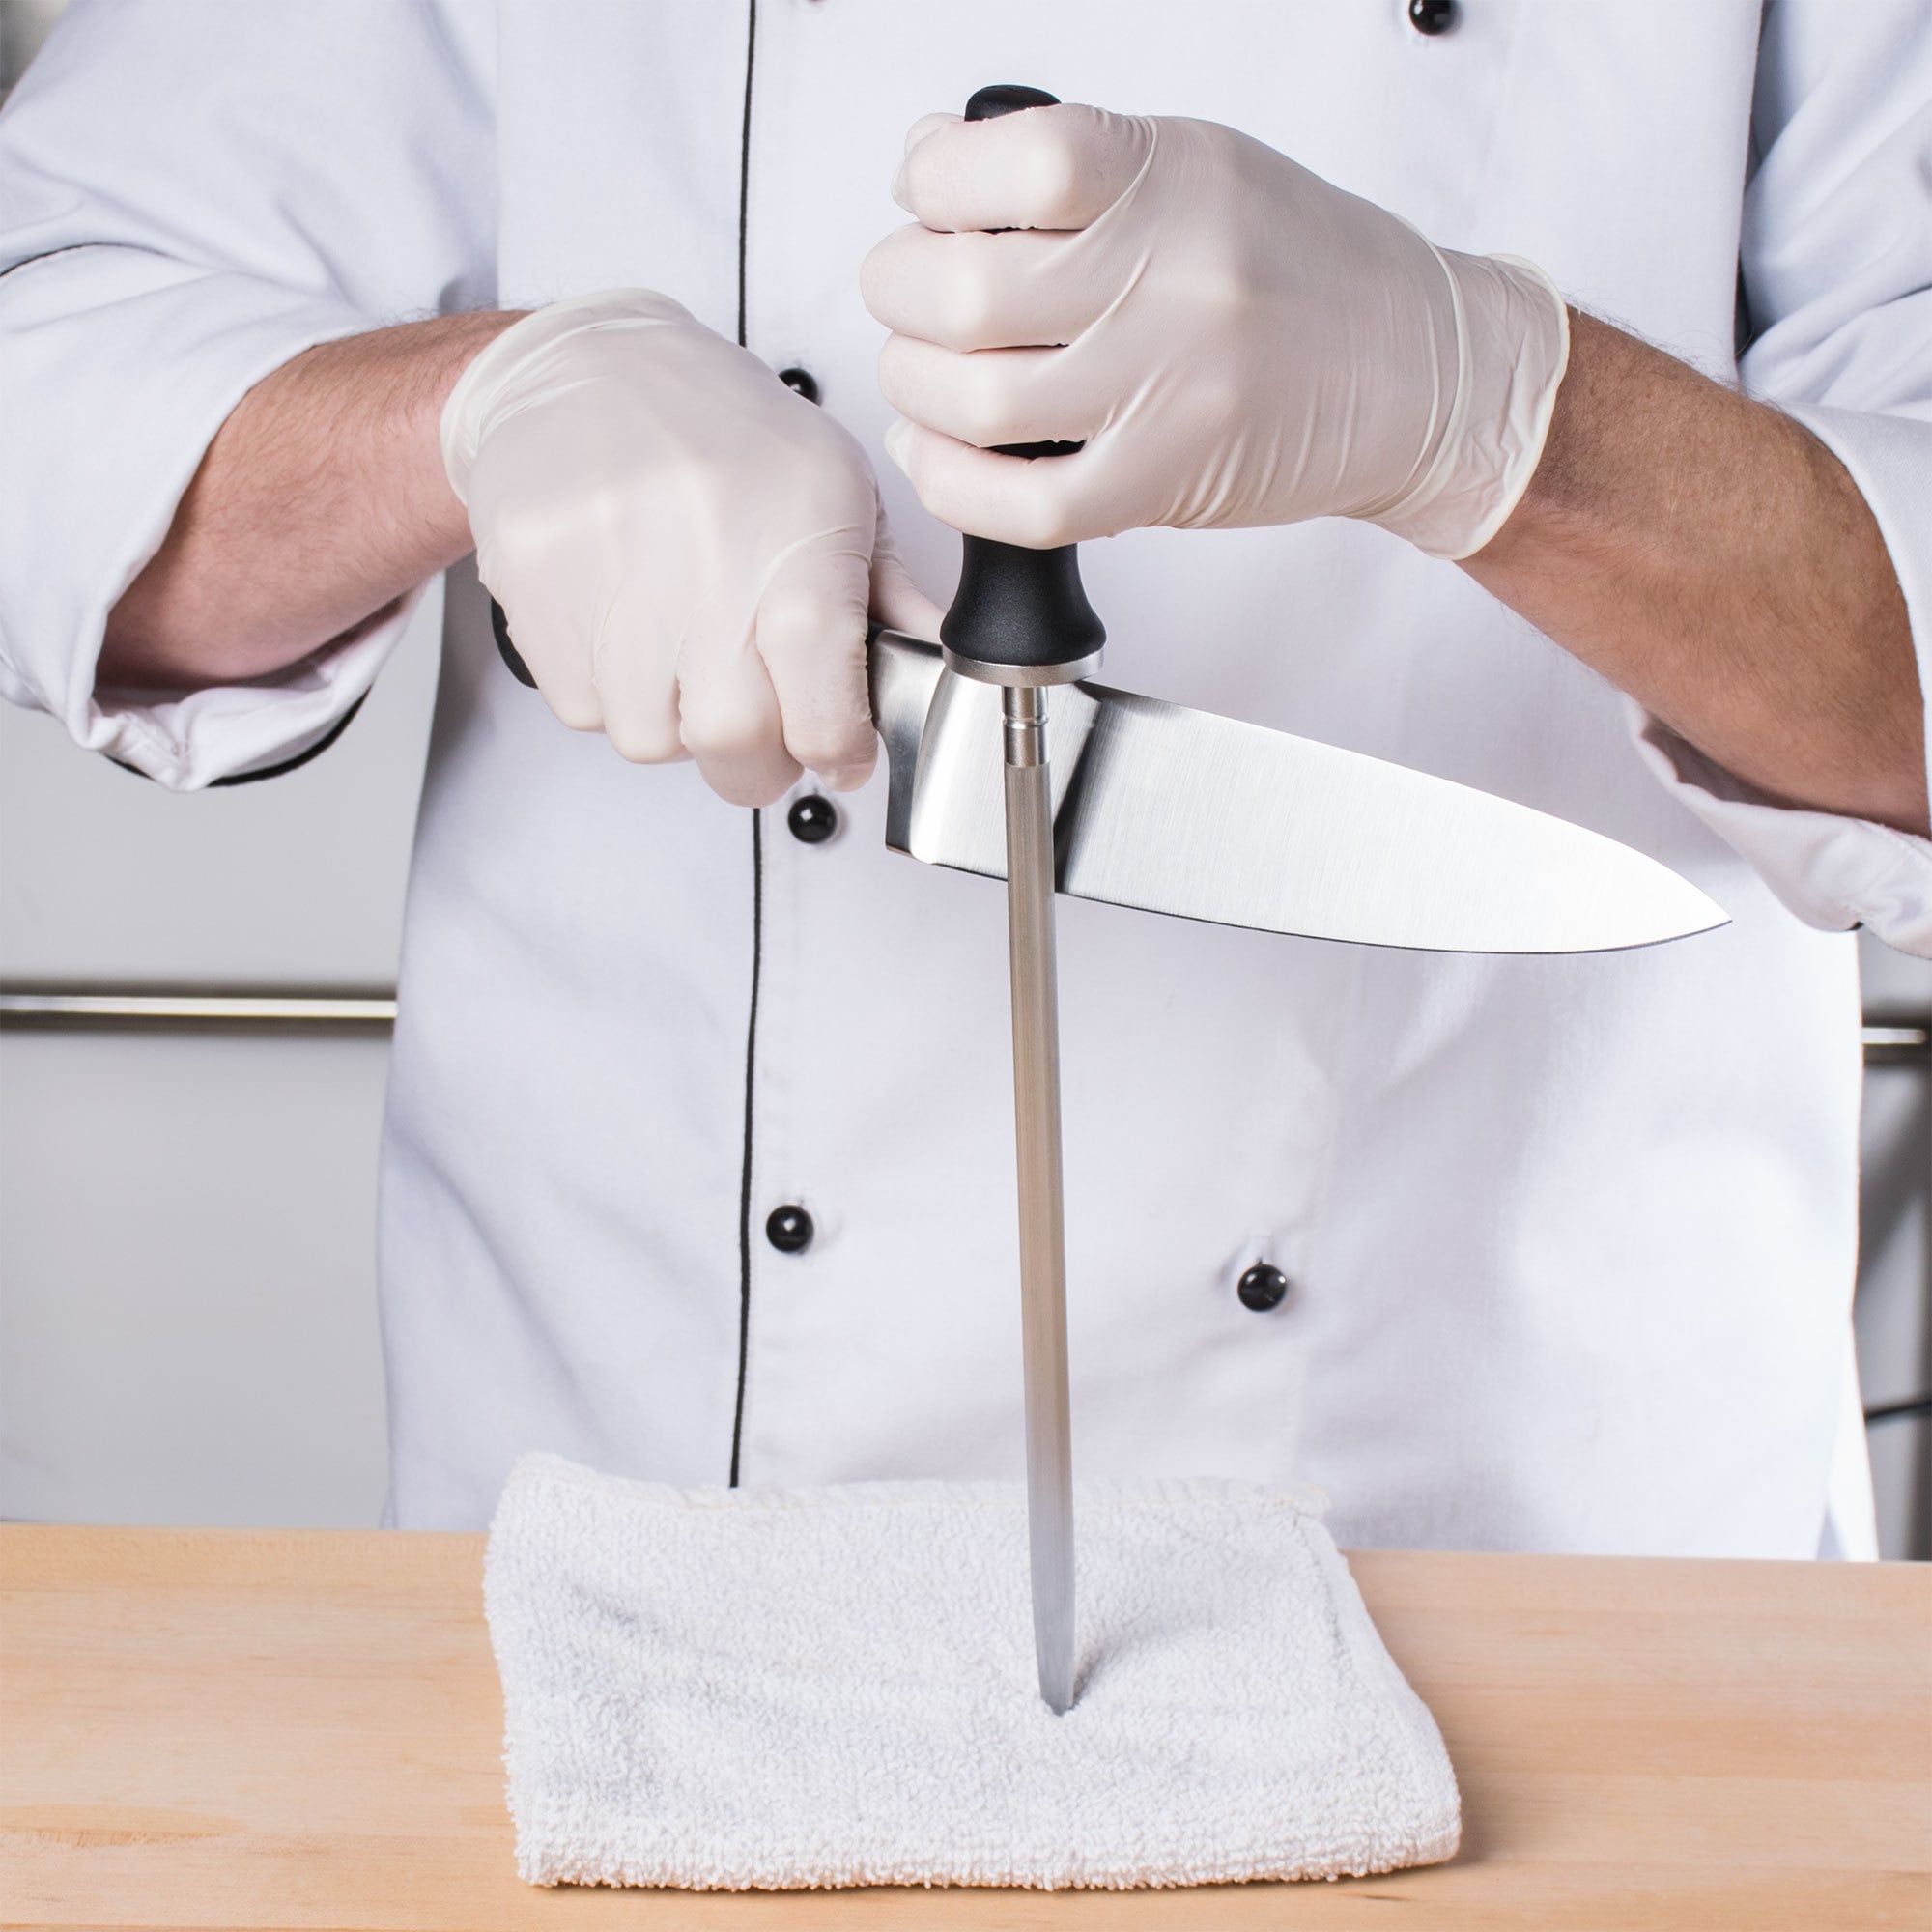 Mercer Culinary Genesis Knife Sharpening Steel, 10 Inch - Bed Bath & Beyond  - 31707762